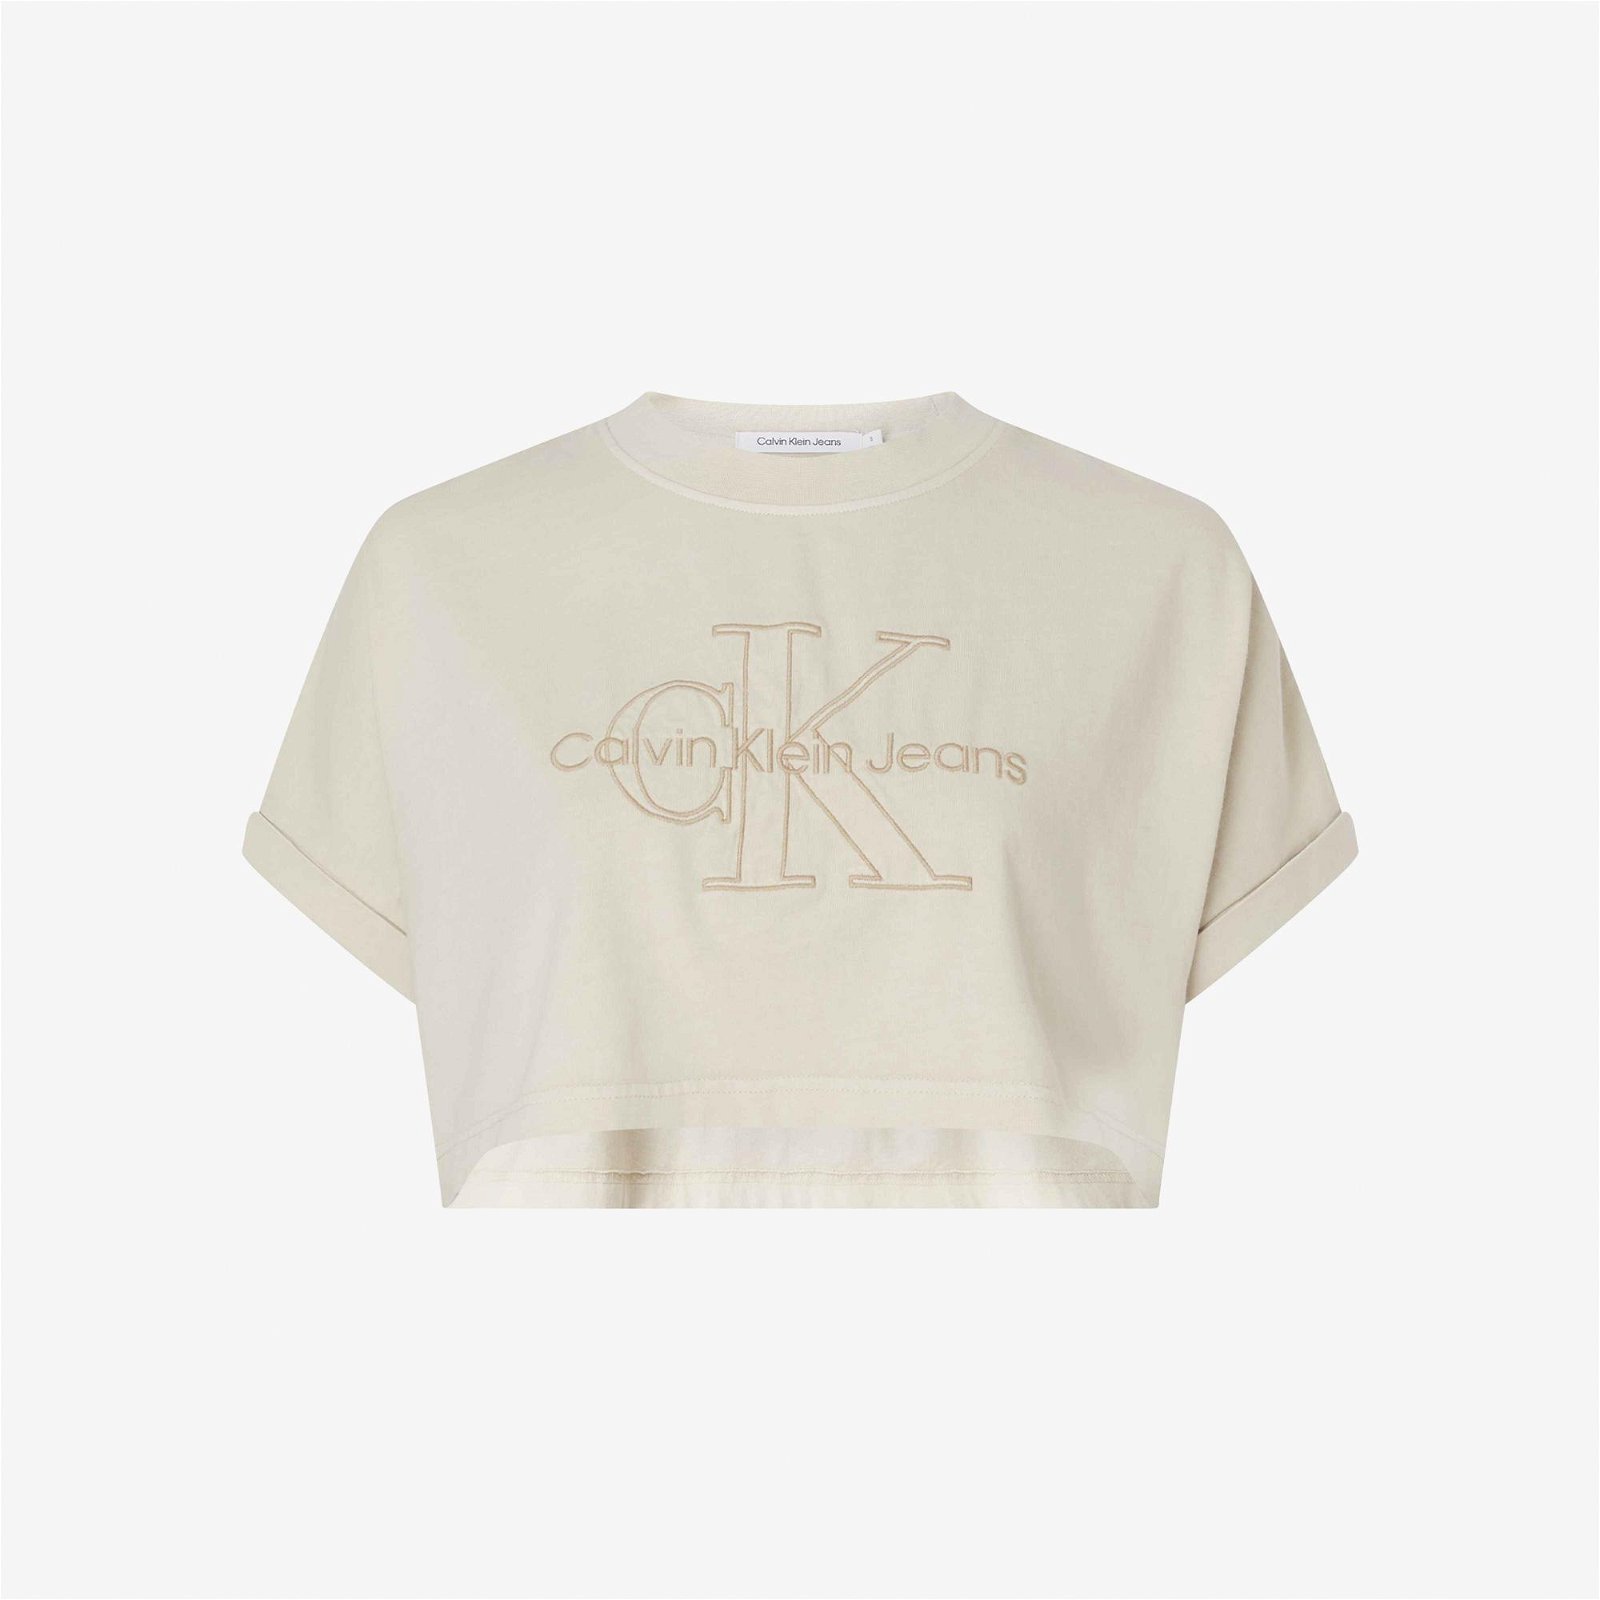  Calvin Klein Jeans Embroidered Monologo Cropped Kadın Bej T-Shirt